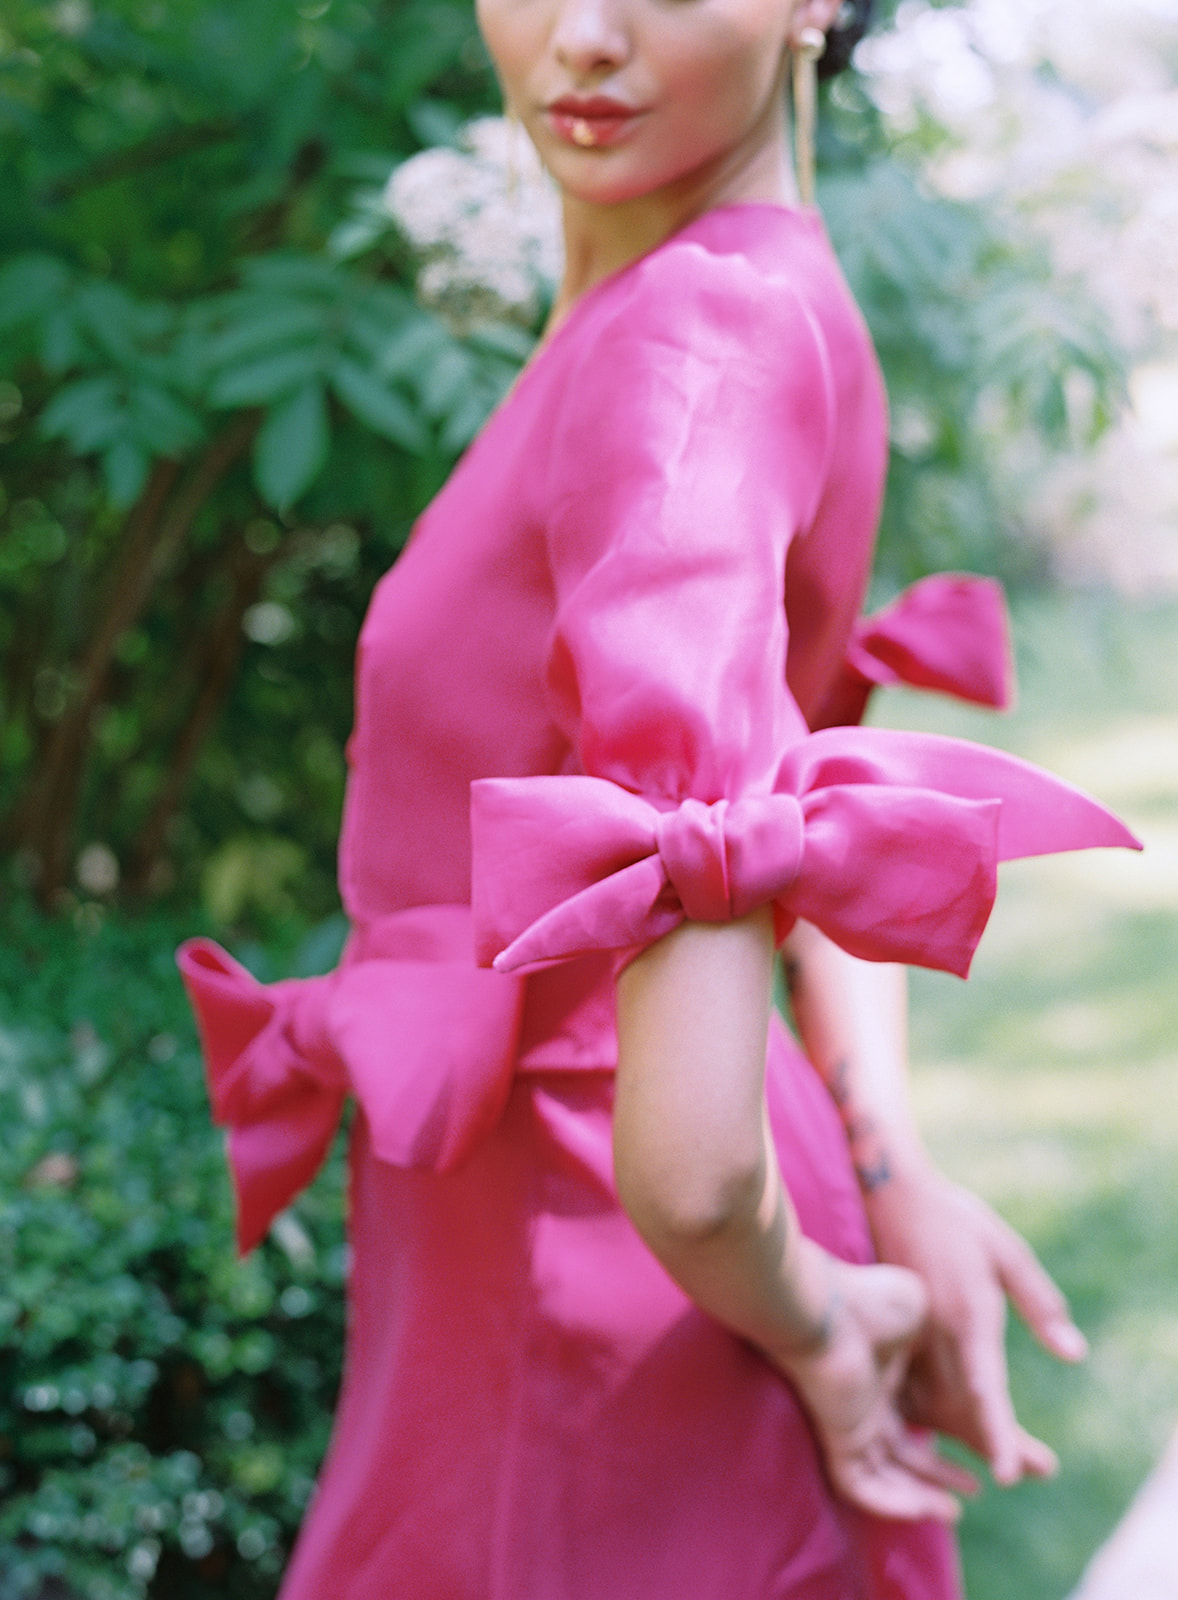 Beautiful pink gown by Naeem Khan in an English Garden